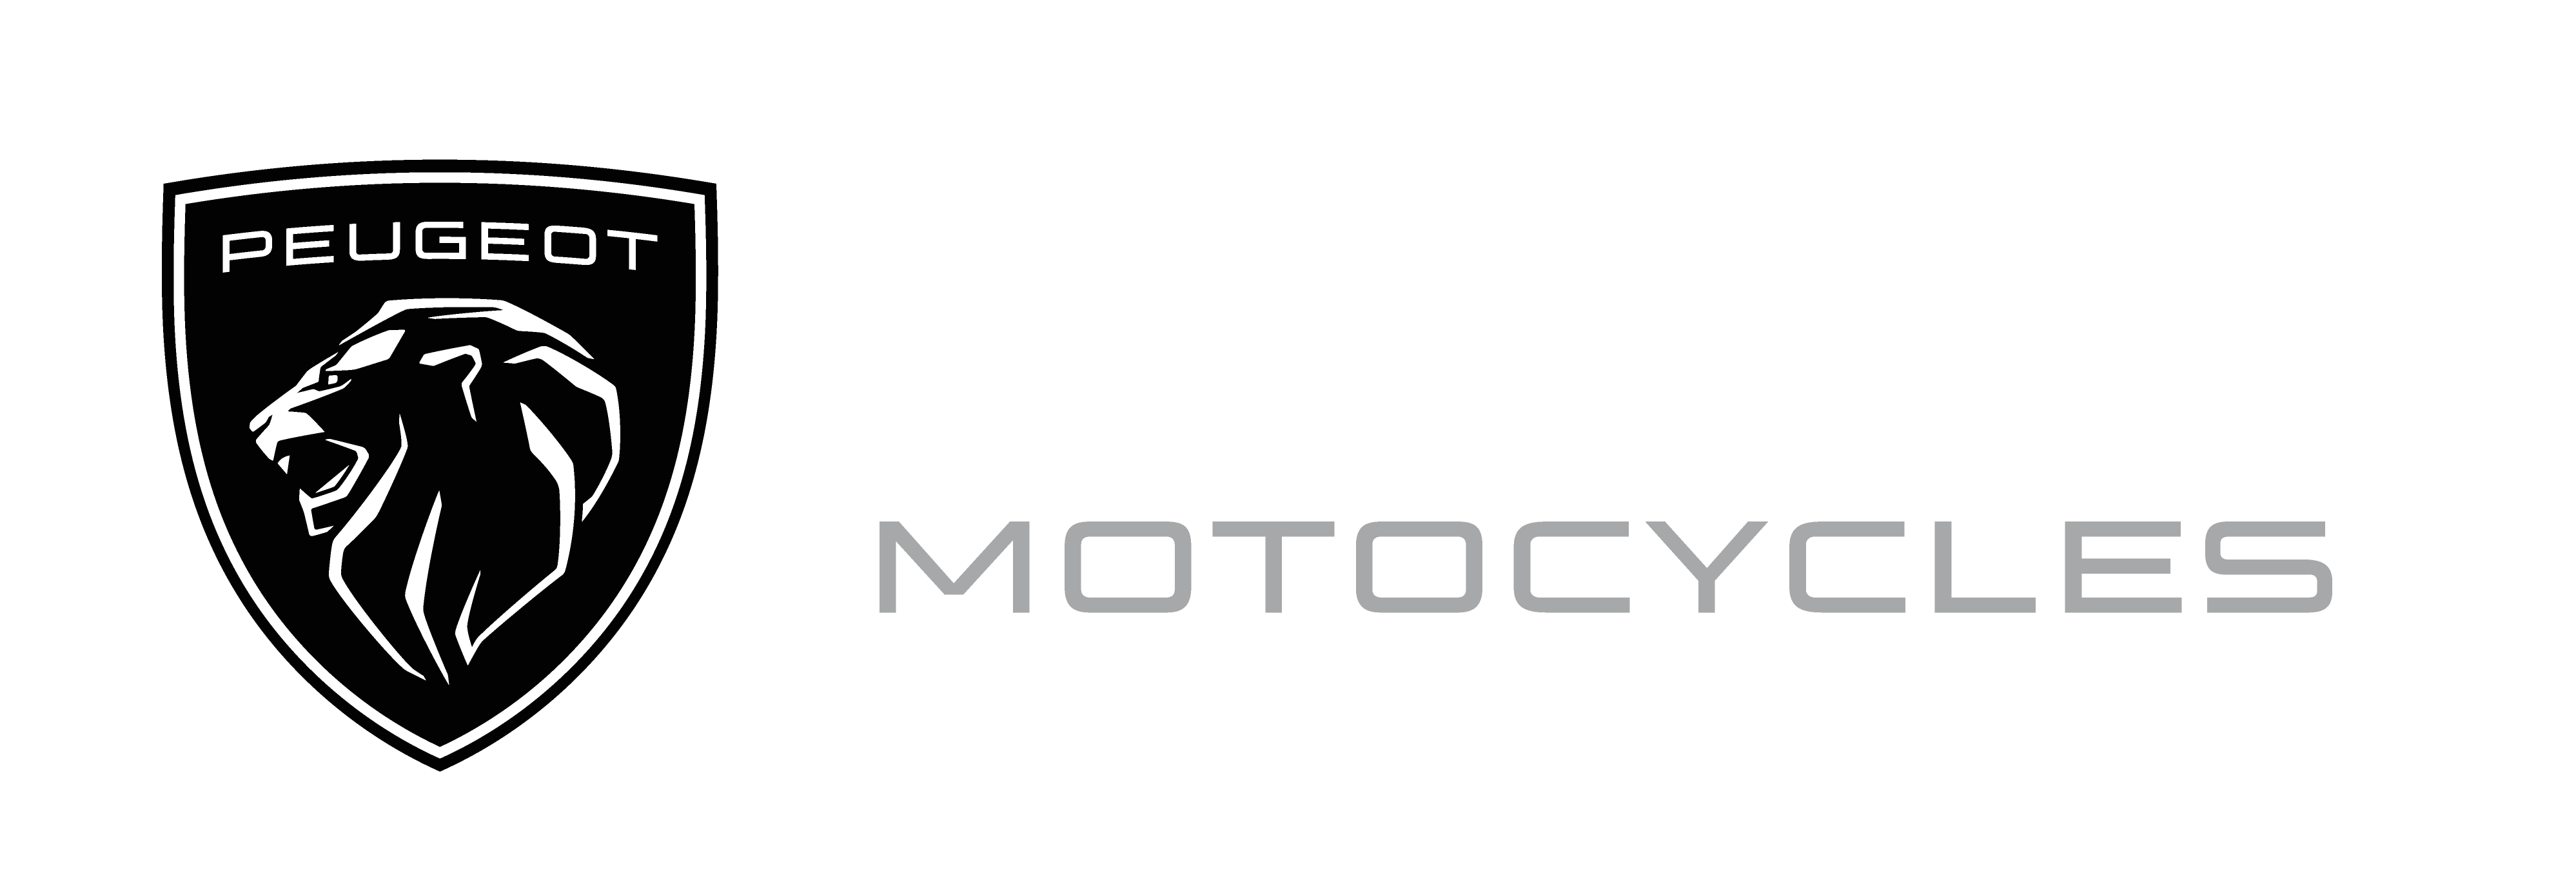 Peugeot Motos